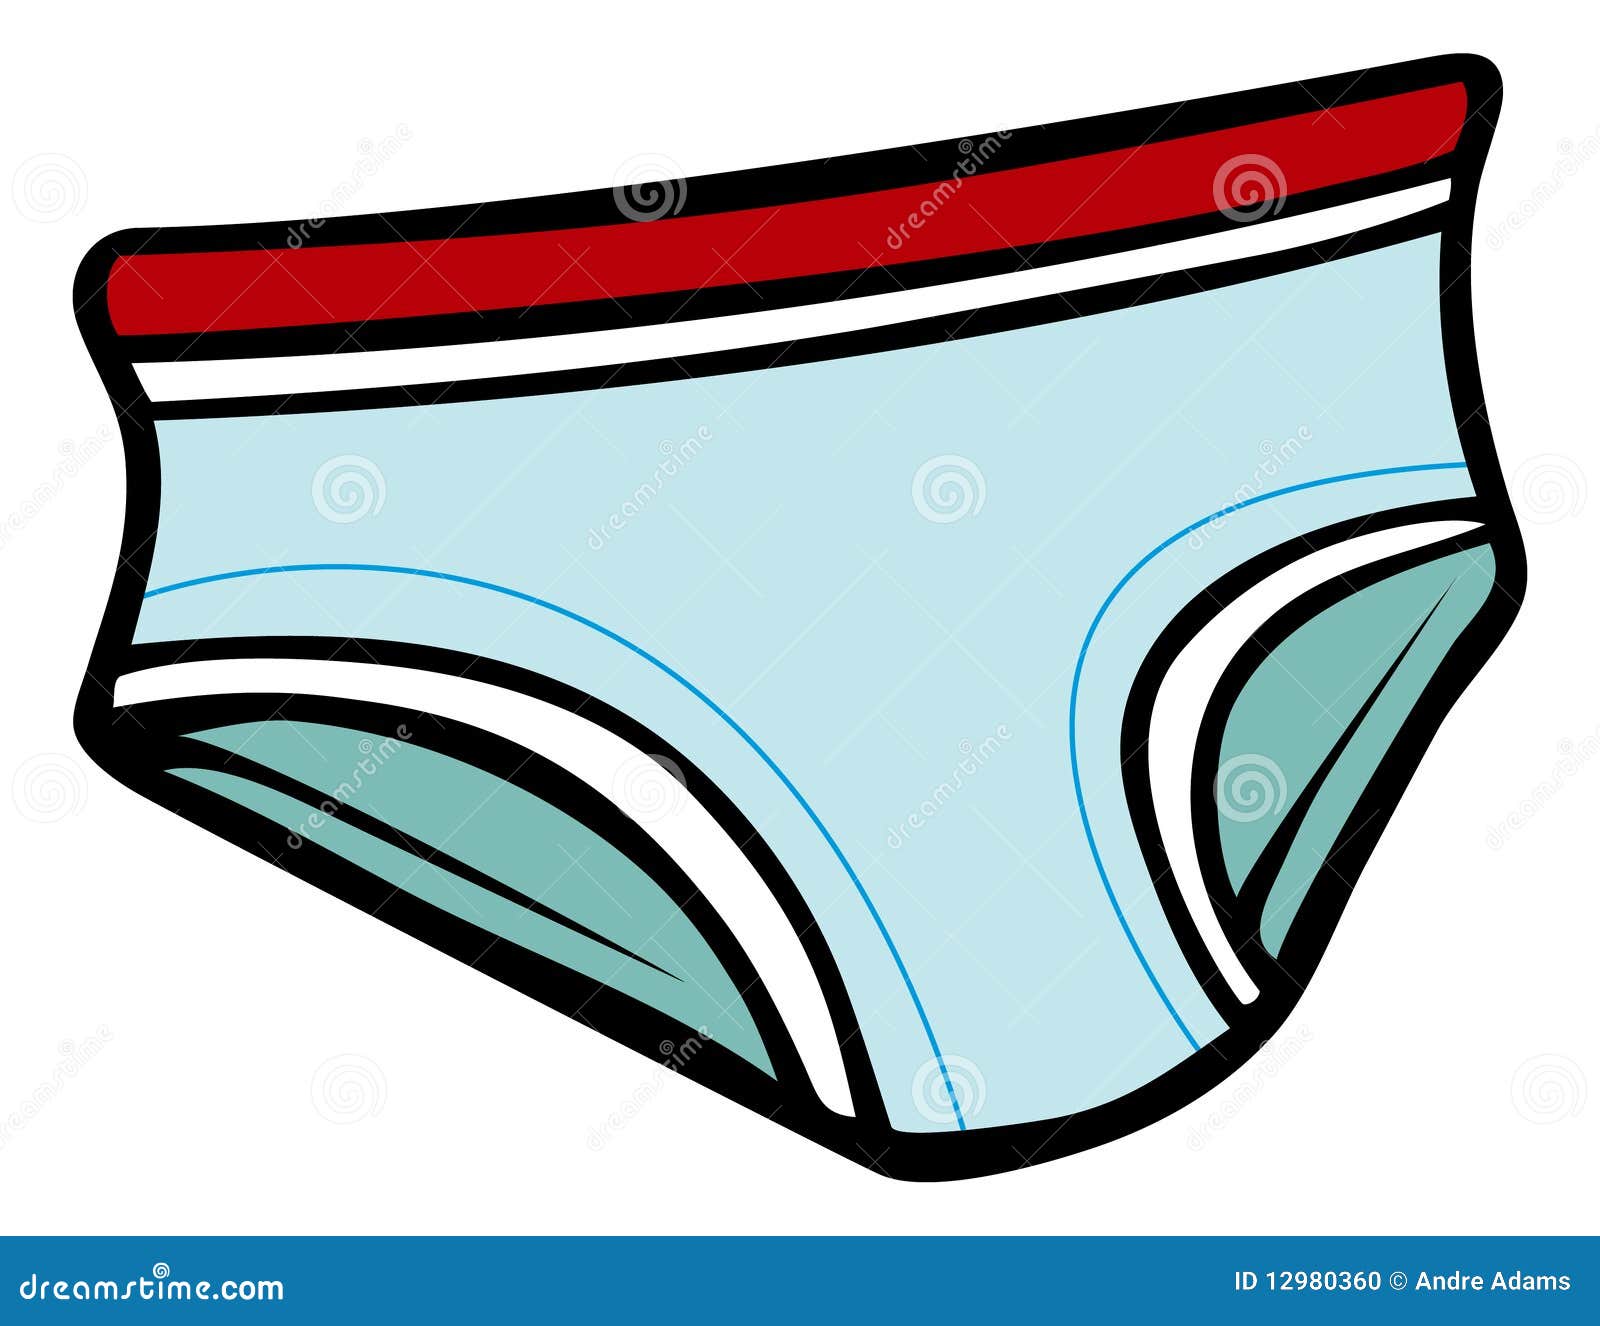 free clipart of underwear - photo #37